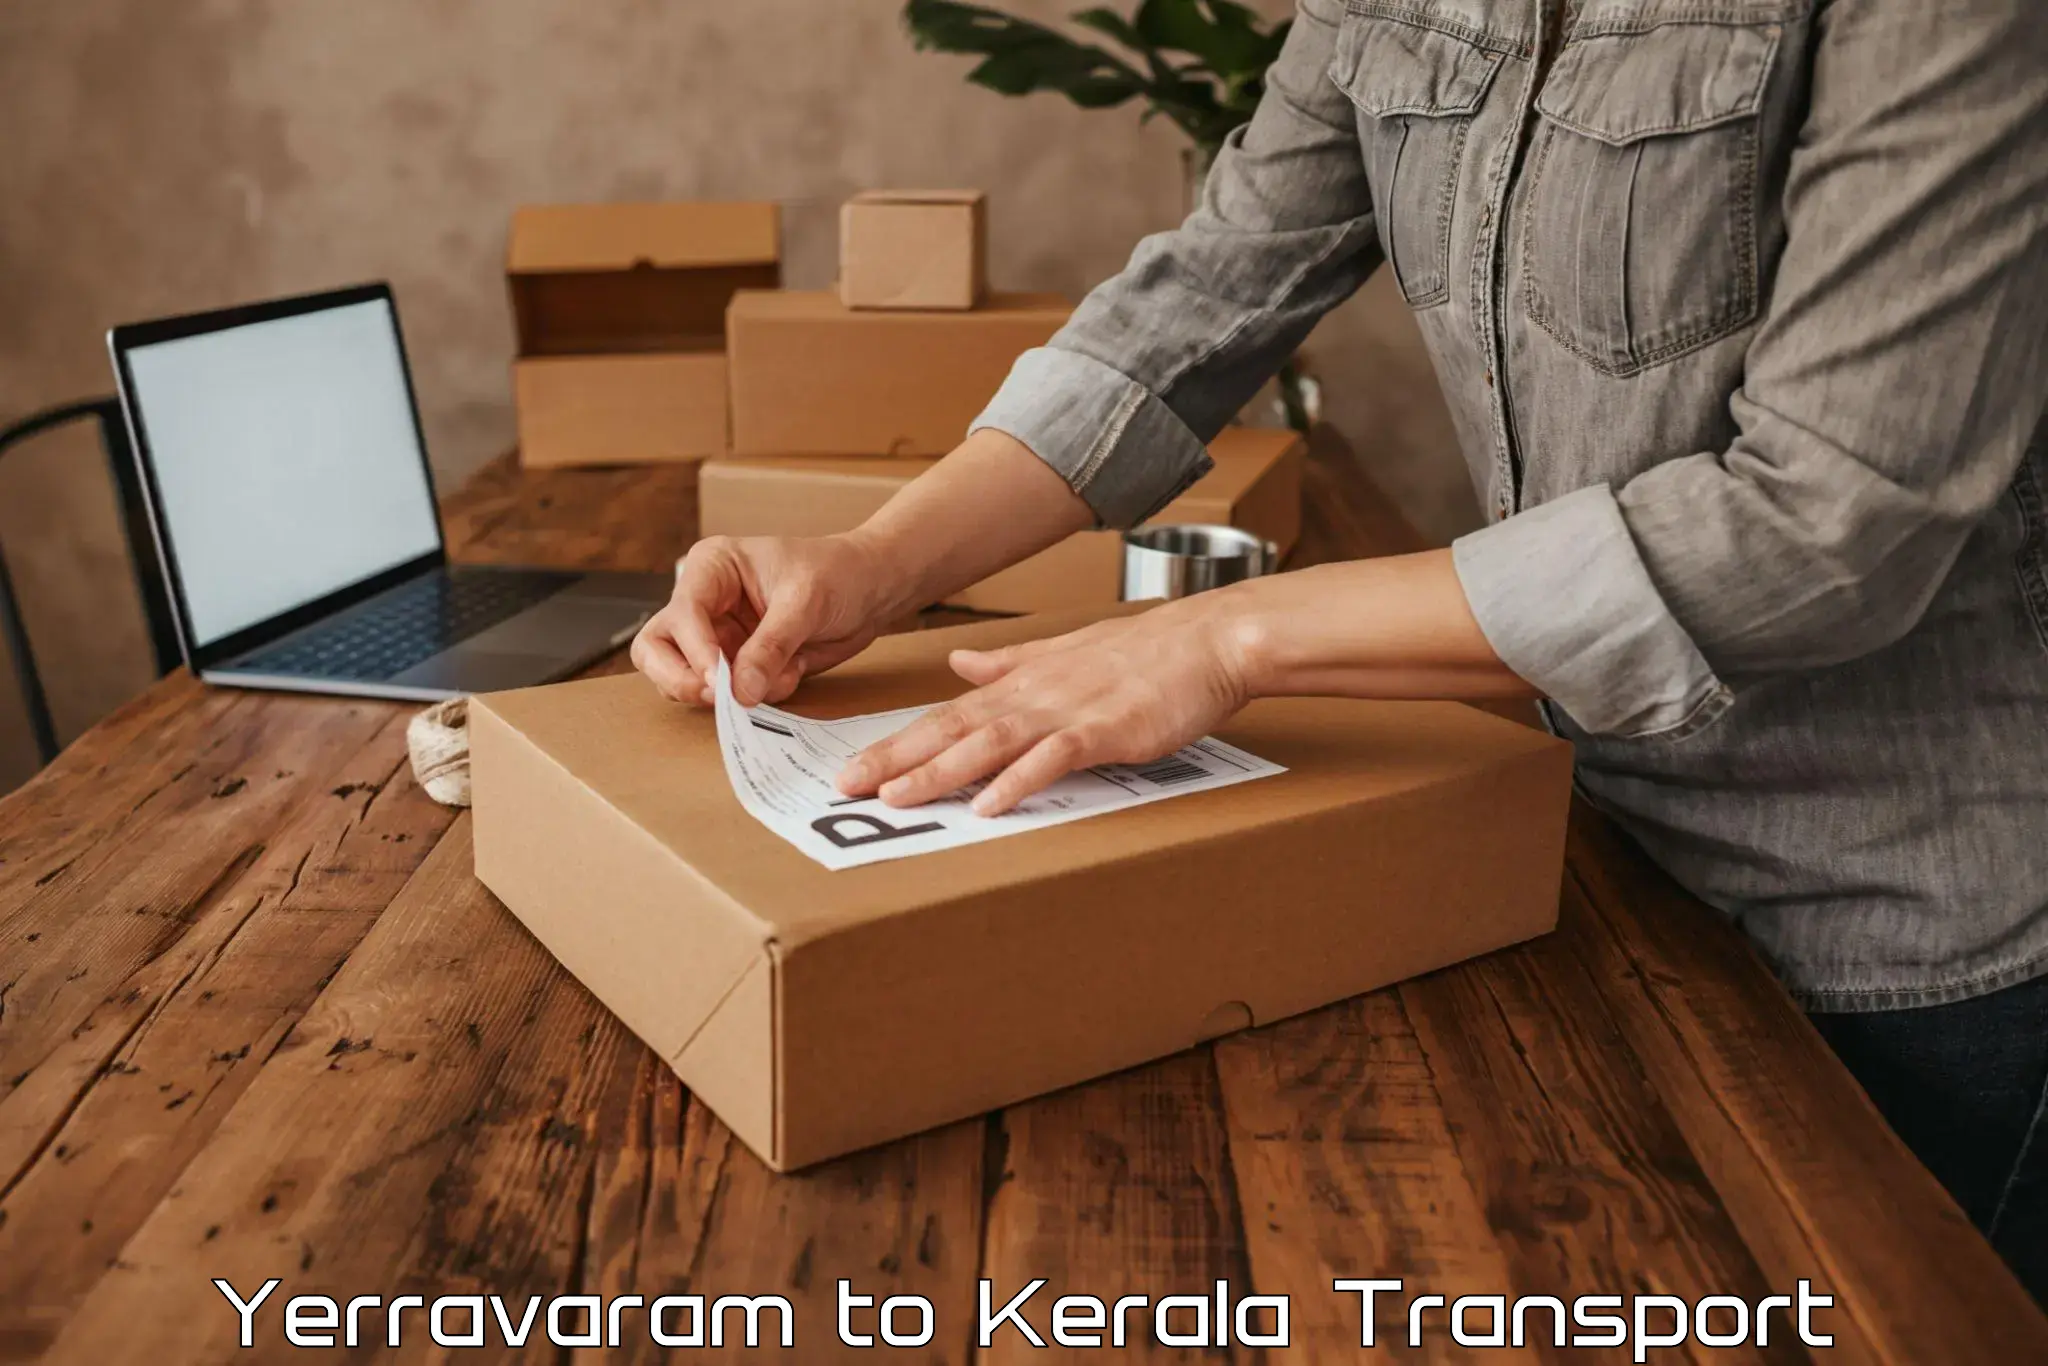 Nationwide transport services Yerravaram to Cochin Port Kochi